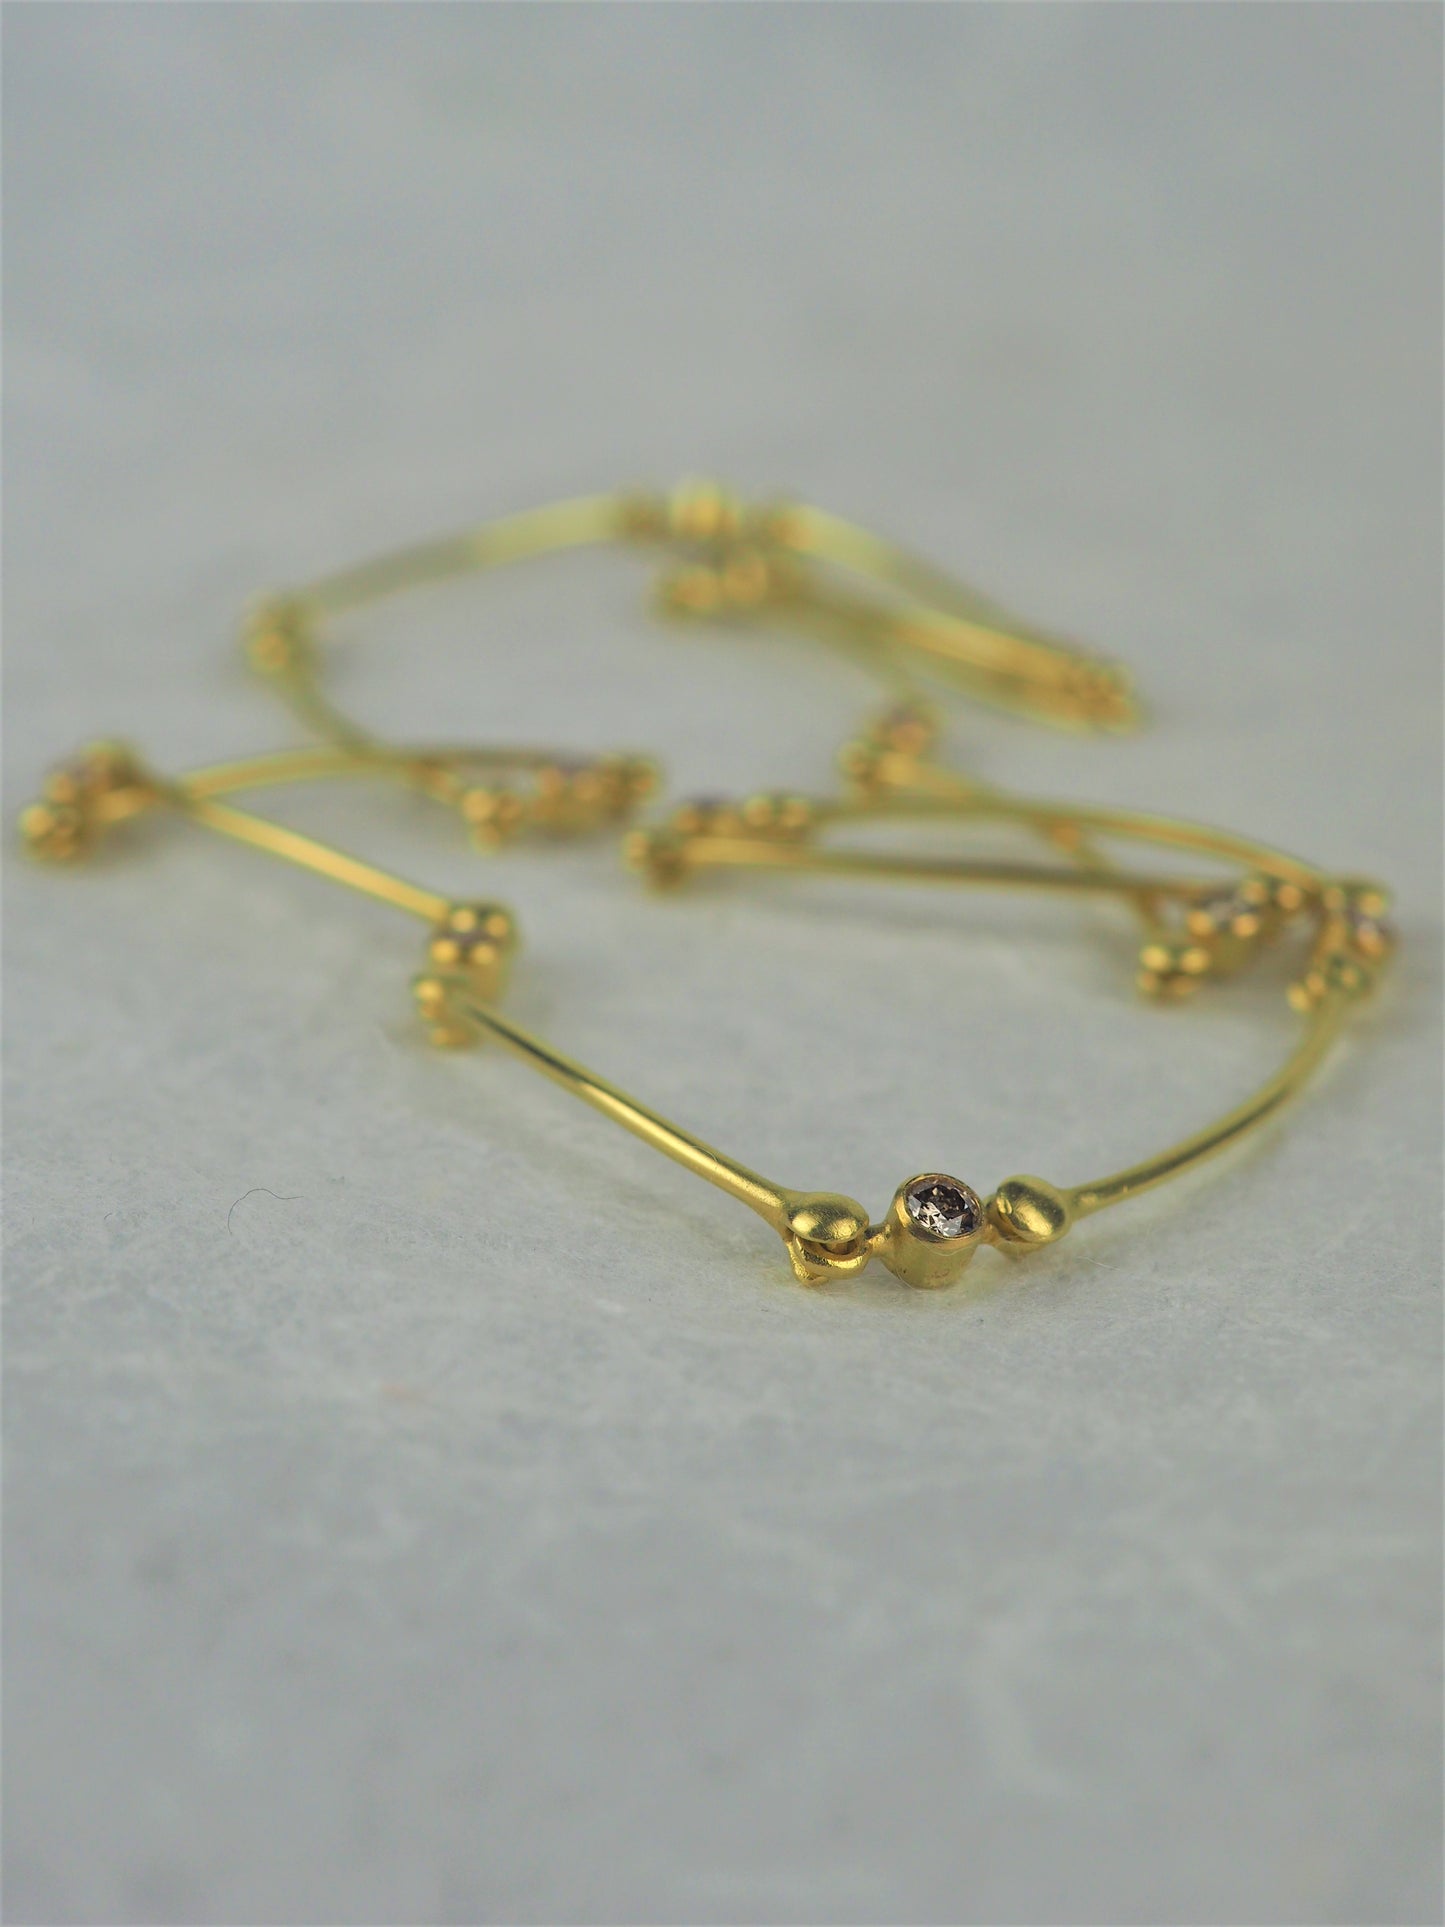 Klosowski, Kai - 18ct Gold and Chocolate Diamond Necklace